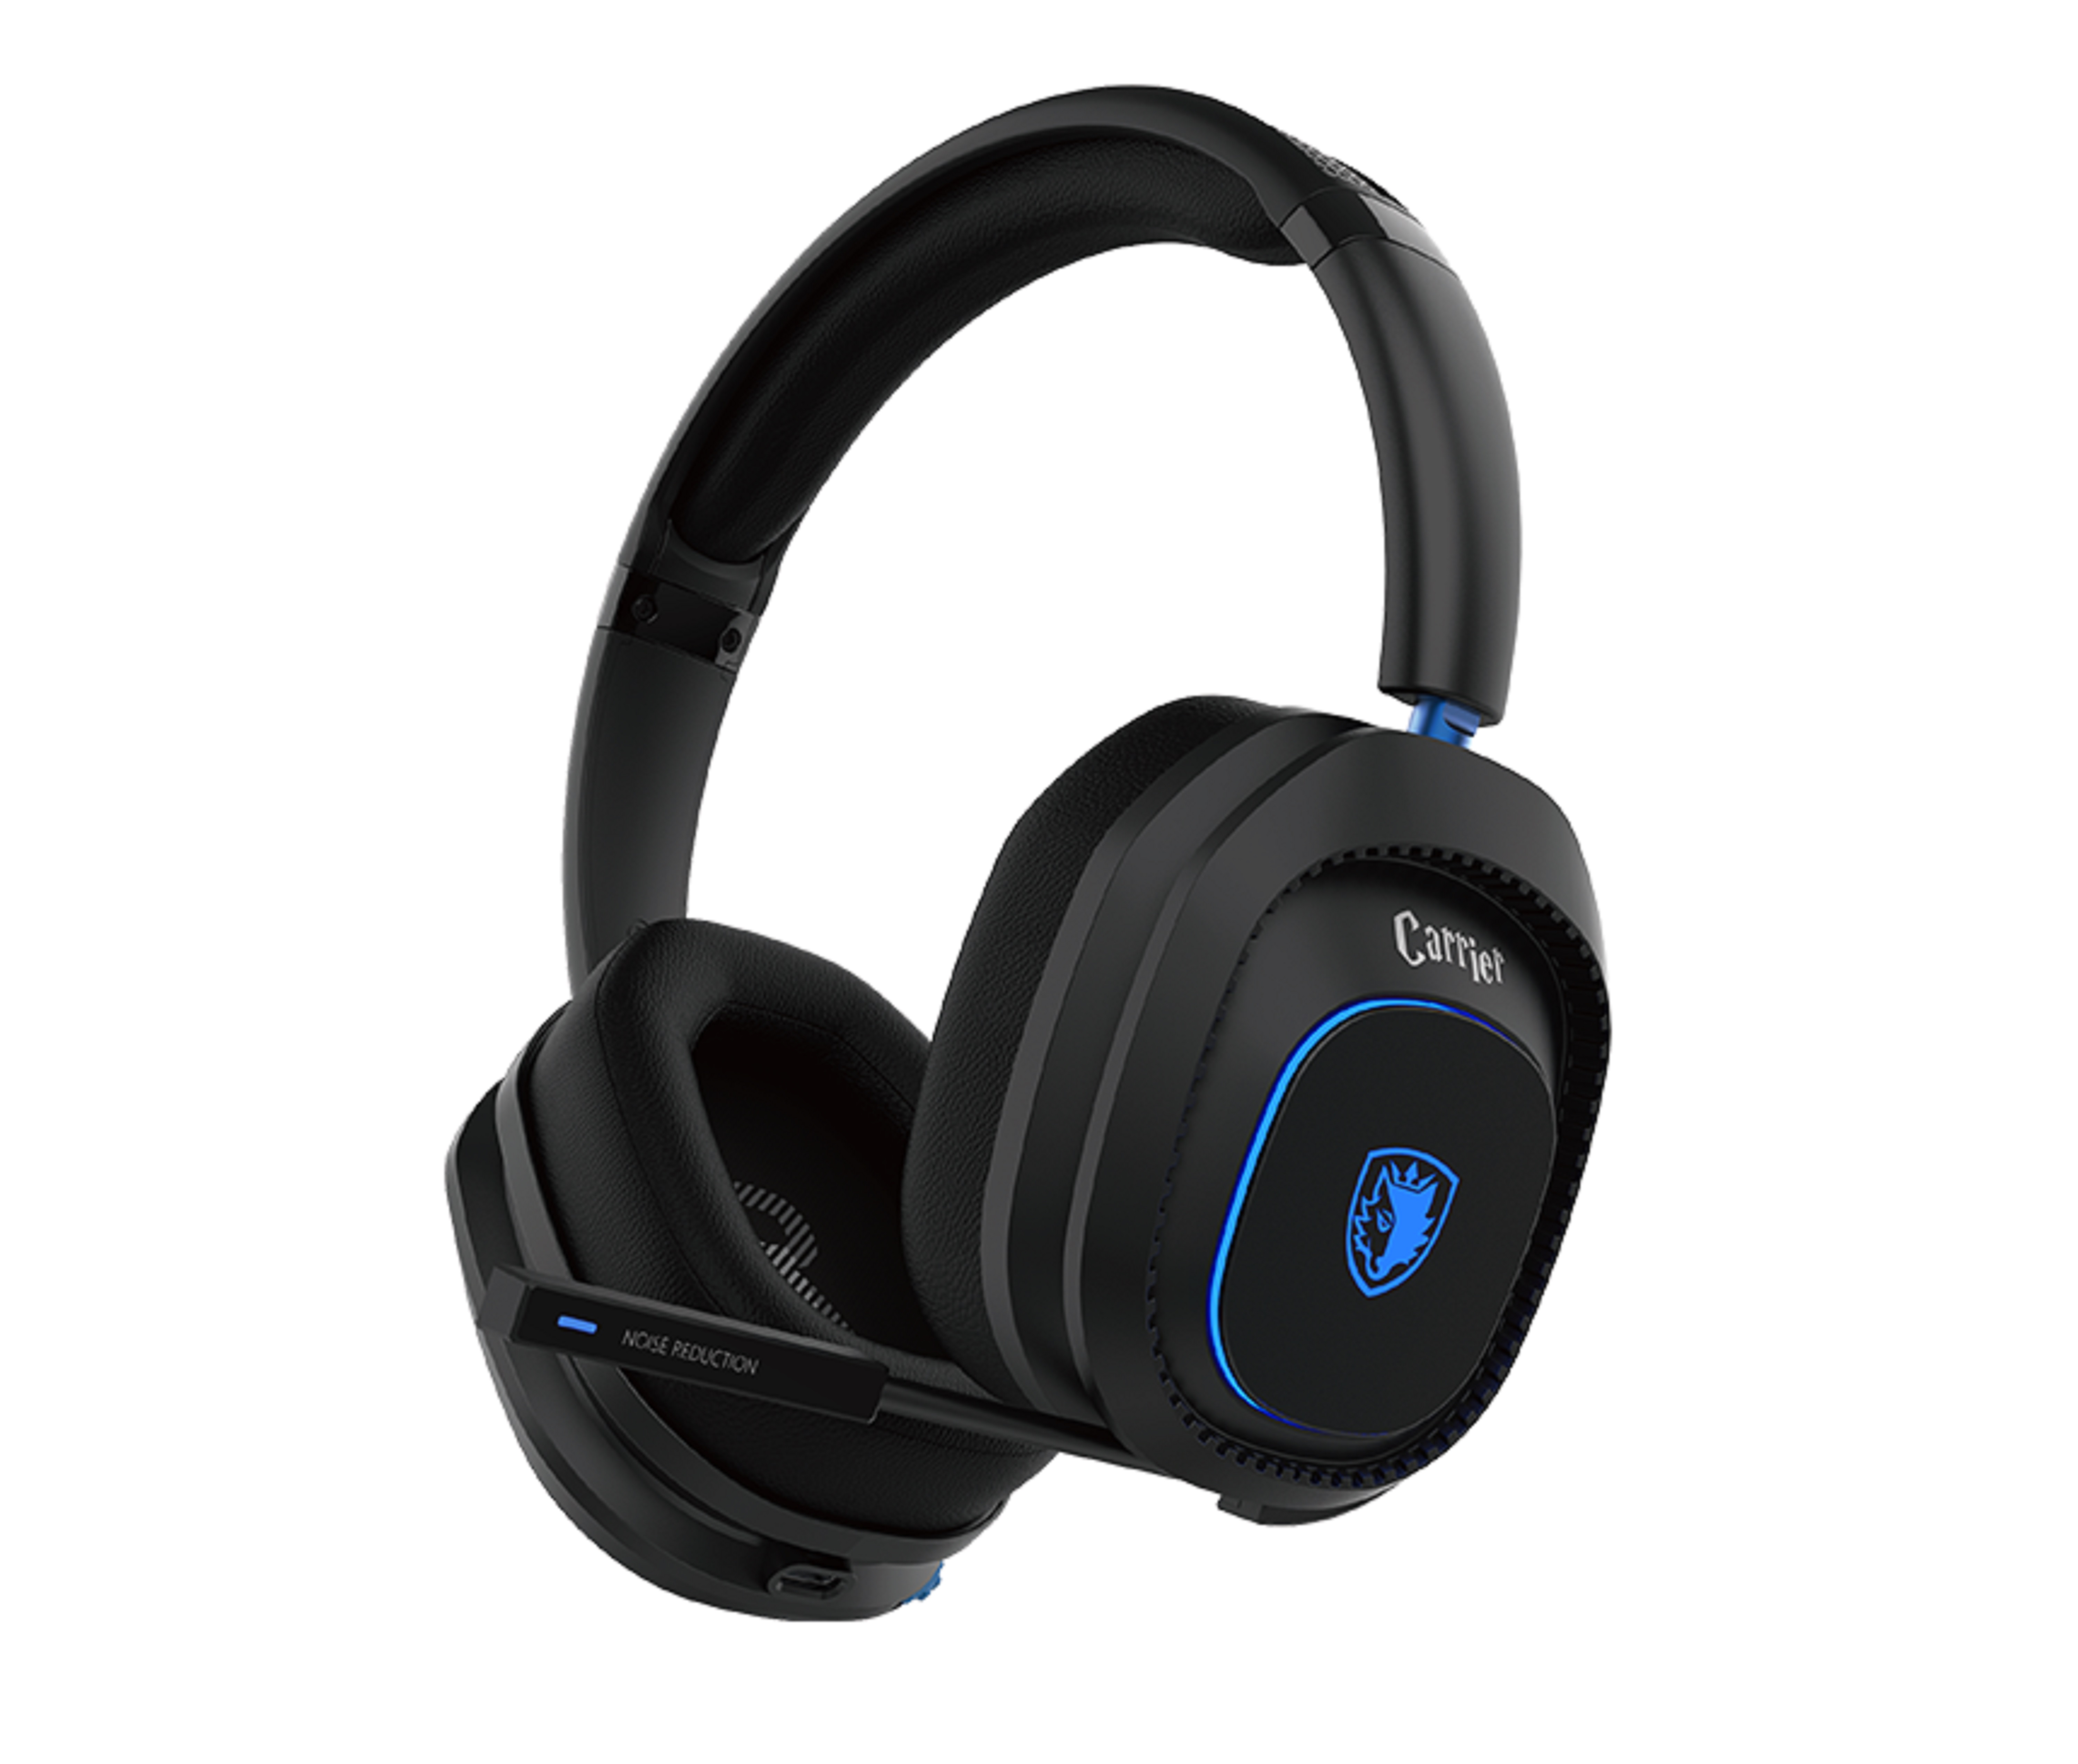 Carrier schwarz/blau Bluetooth Gaming-Headset SADES SA-203, Over-ear